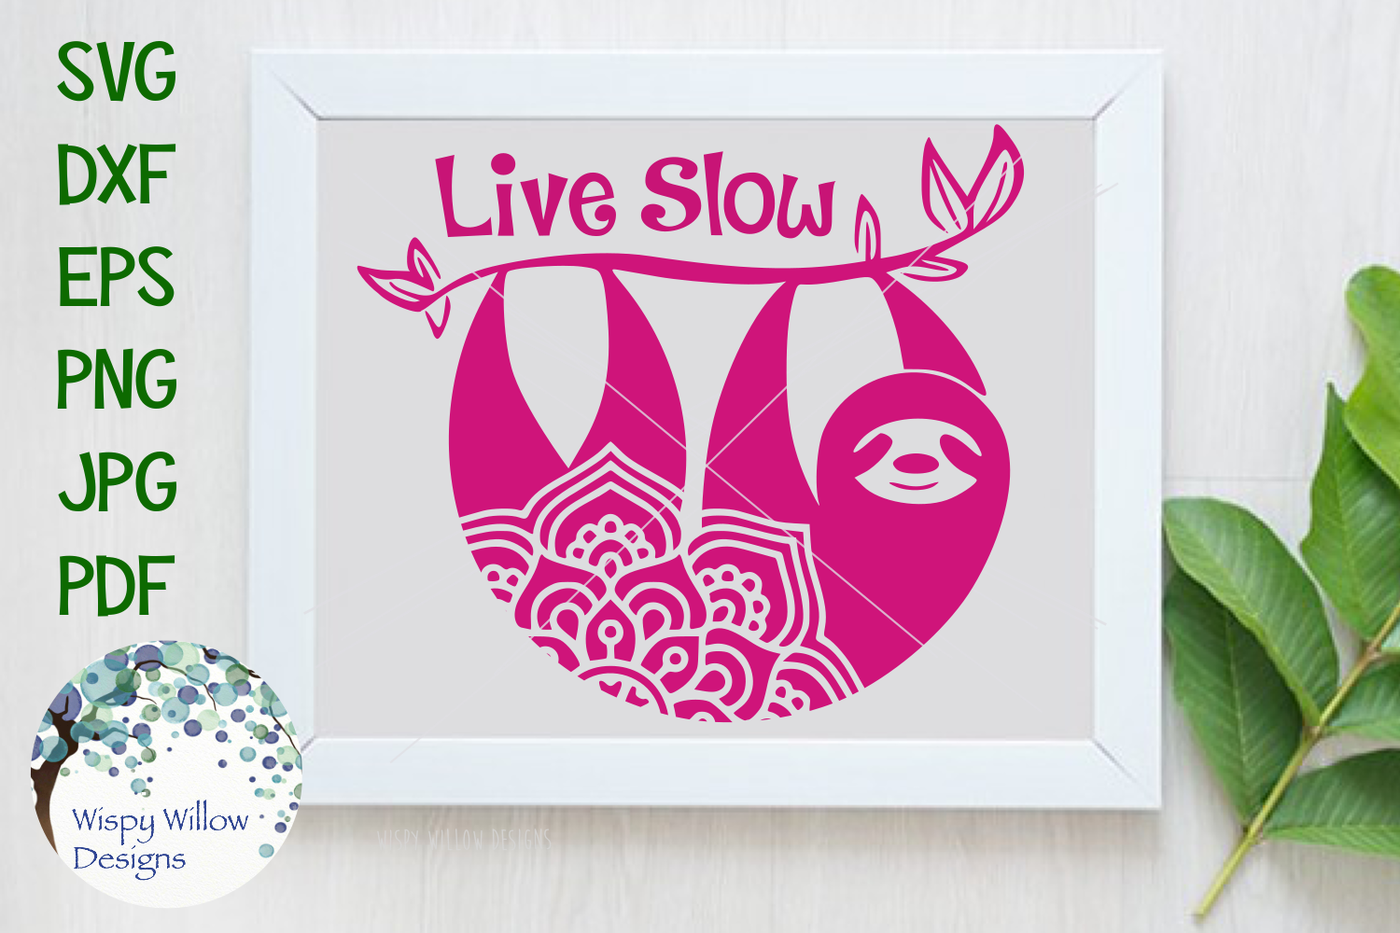 Live Slow Sloth Mandala Svg Dxf Eps Png Jpg Pdf By Wispy Willow Designs Thehungryjpeg Com